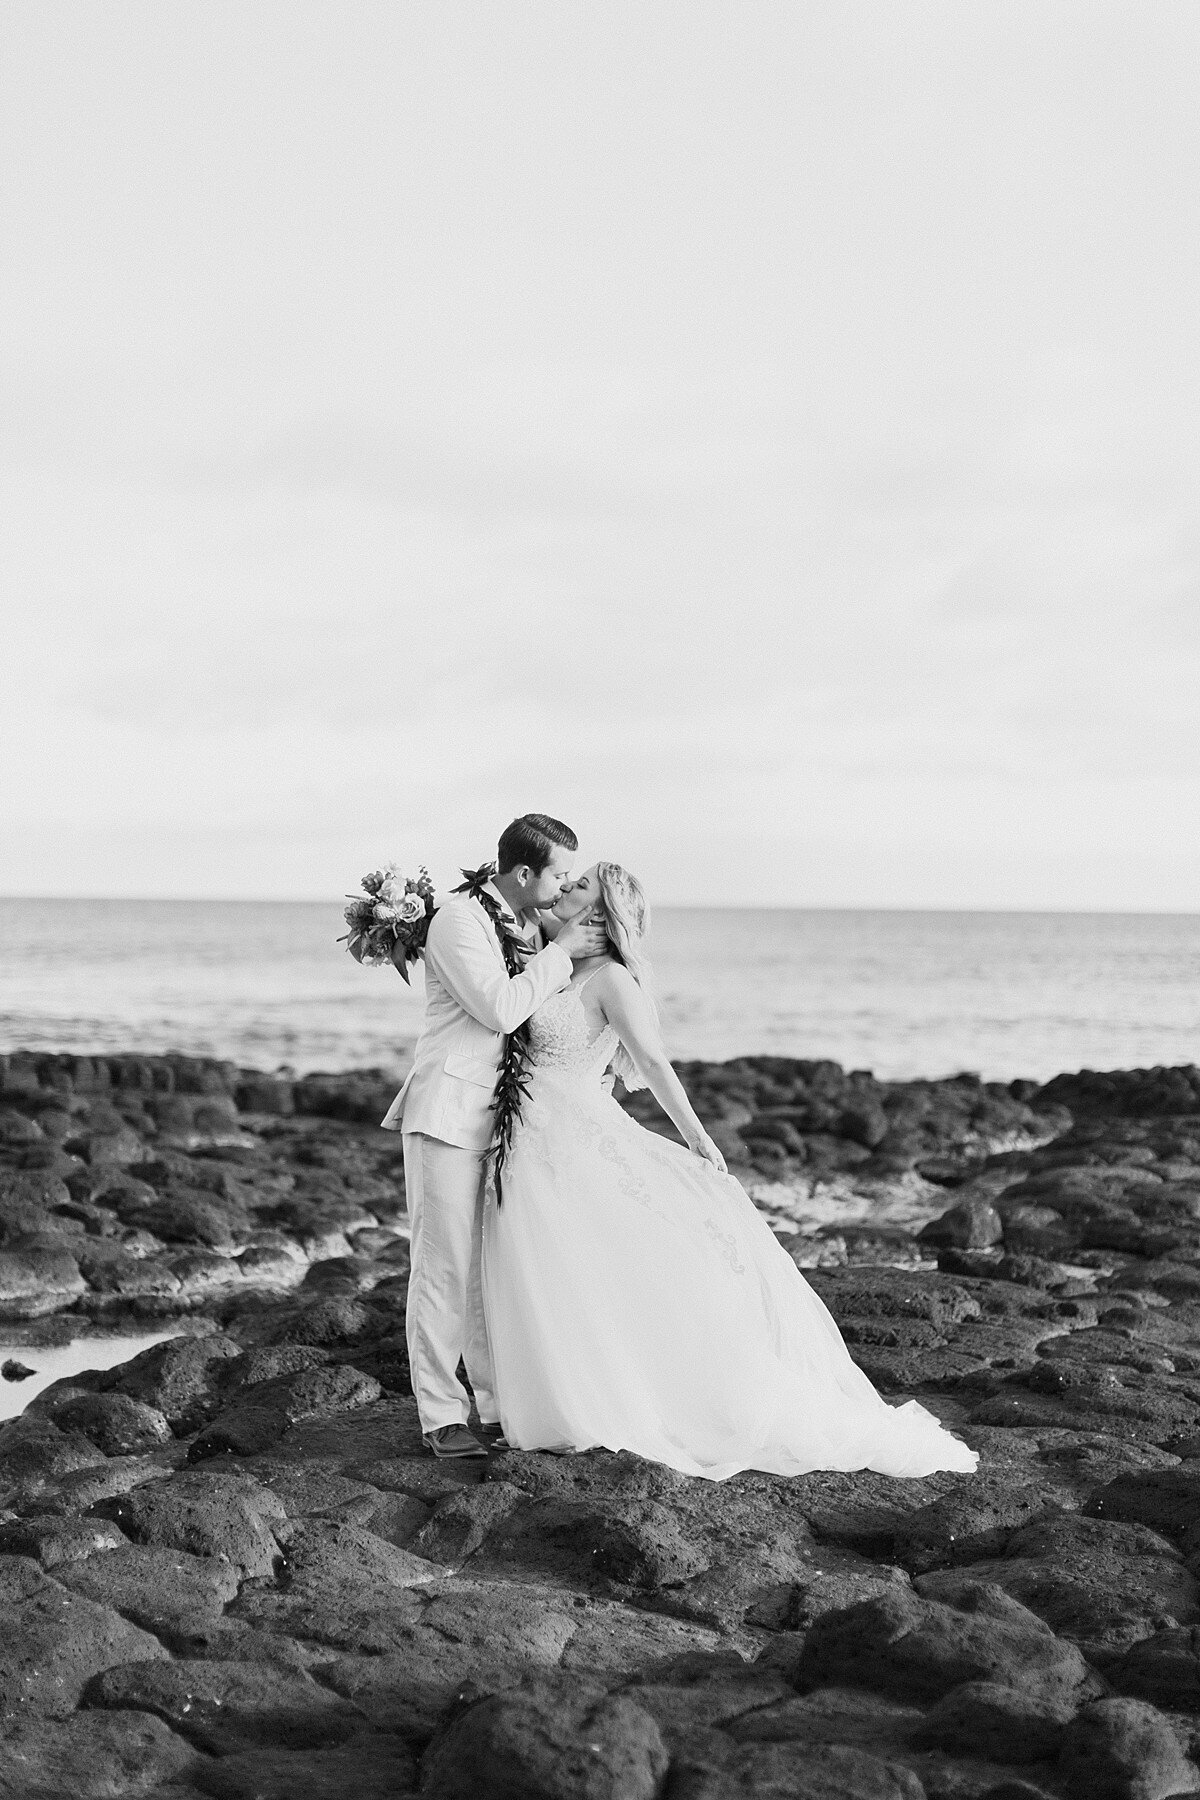 Stunning Hawaii Destination Wedding Photography on the island of Kauai.